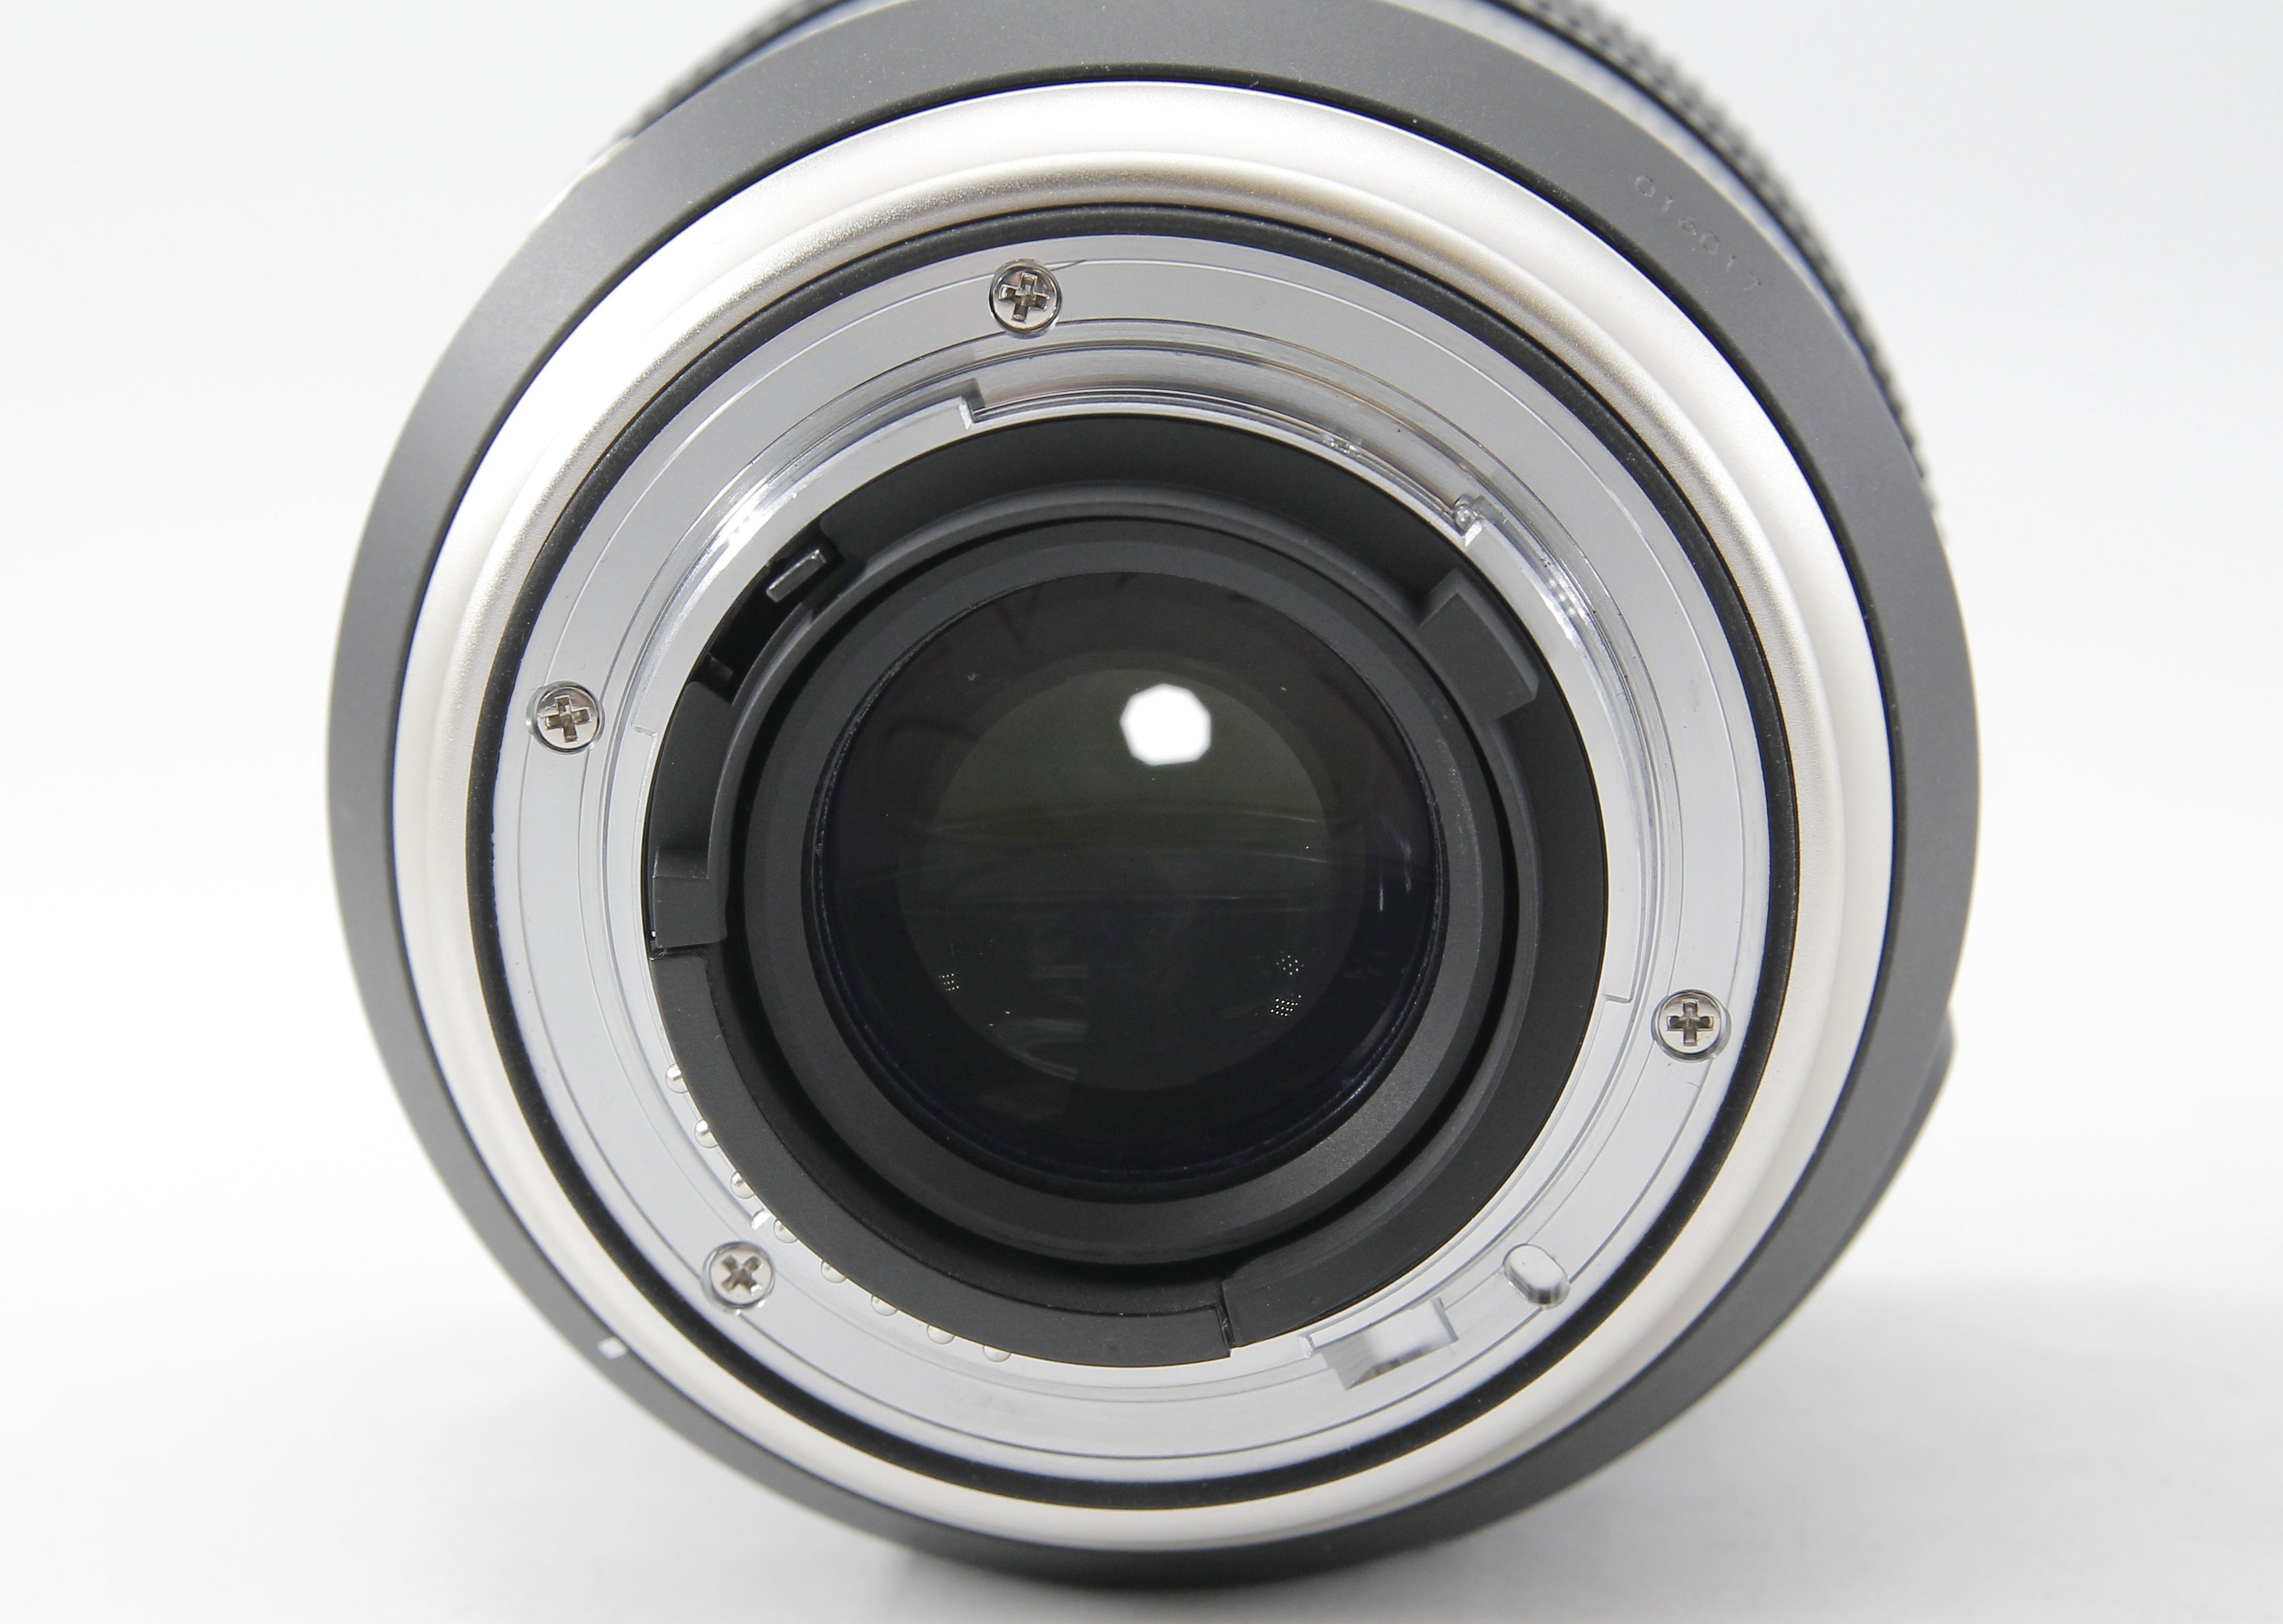 *** DEMO *** Tamron SP 35mm f/1.8 Di VC USD Lens for Nikon F